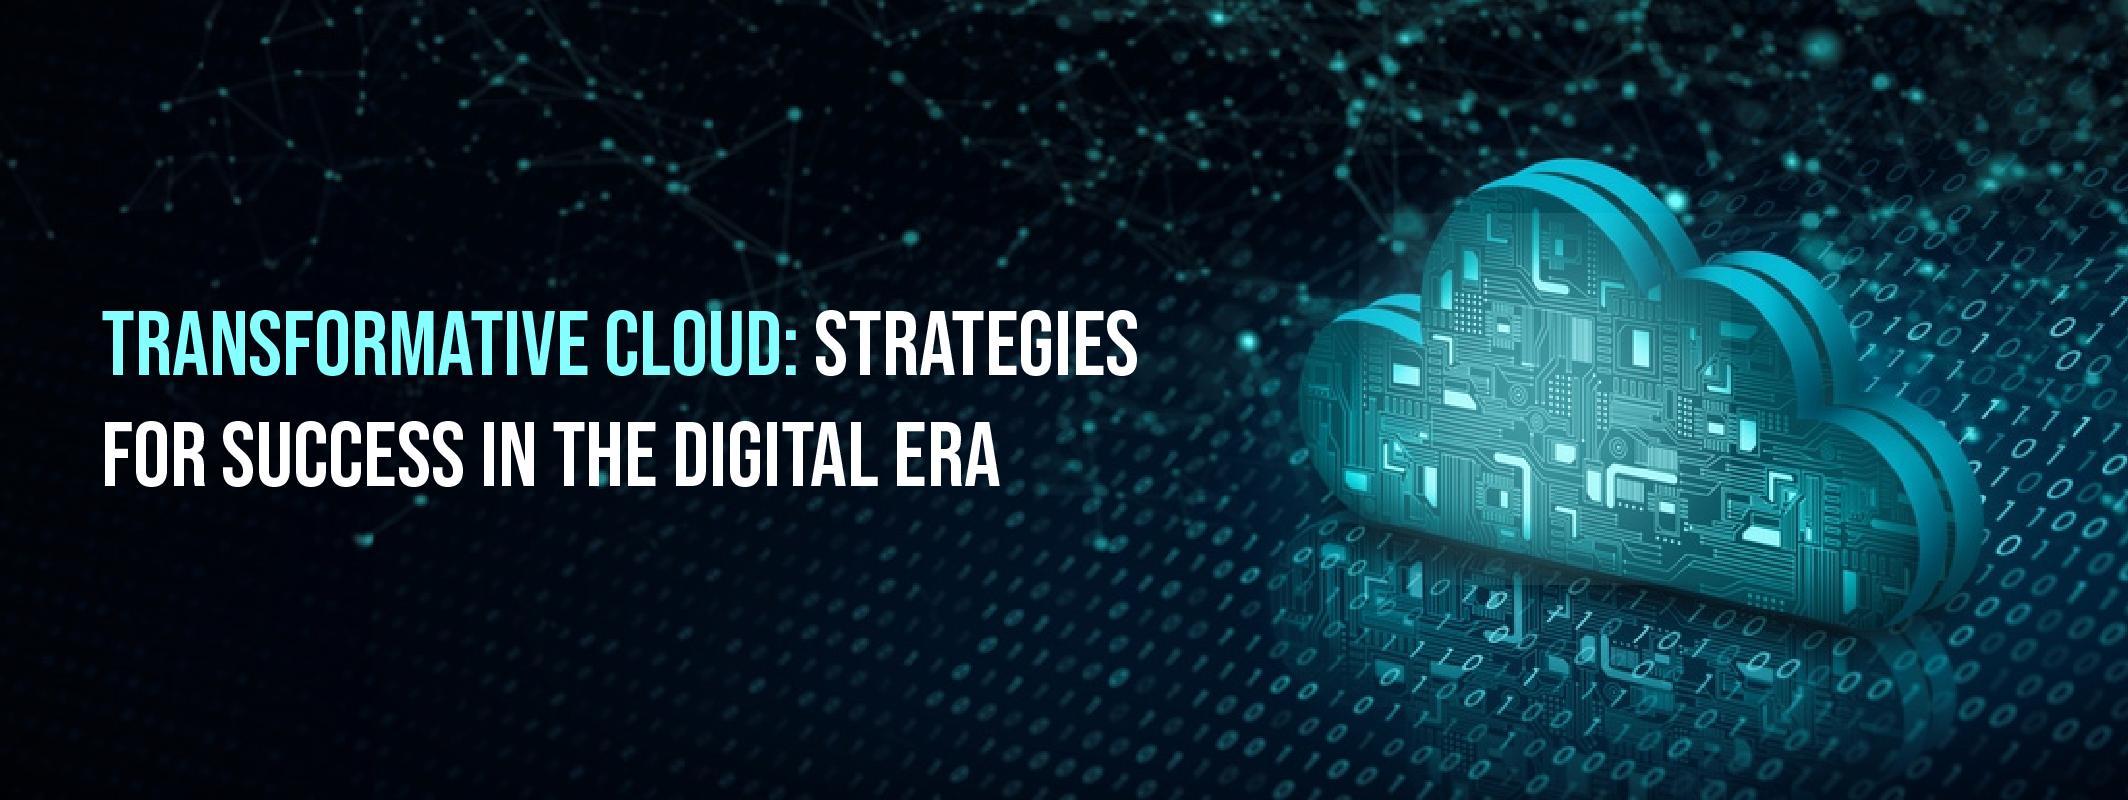 Transformative Cloud: Strategies for Success in the Digital Era